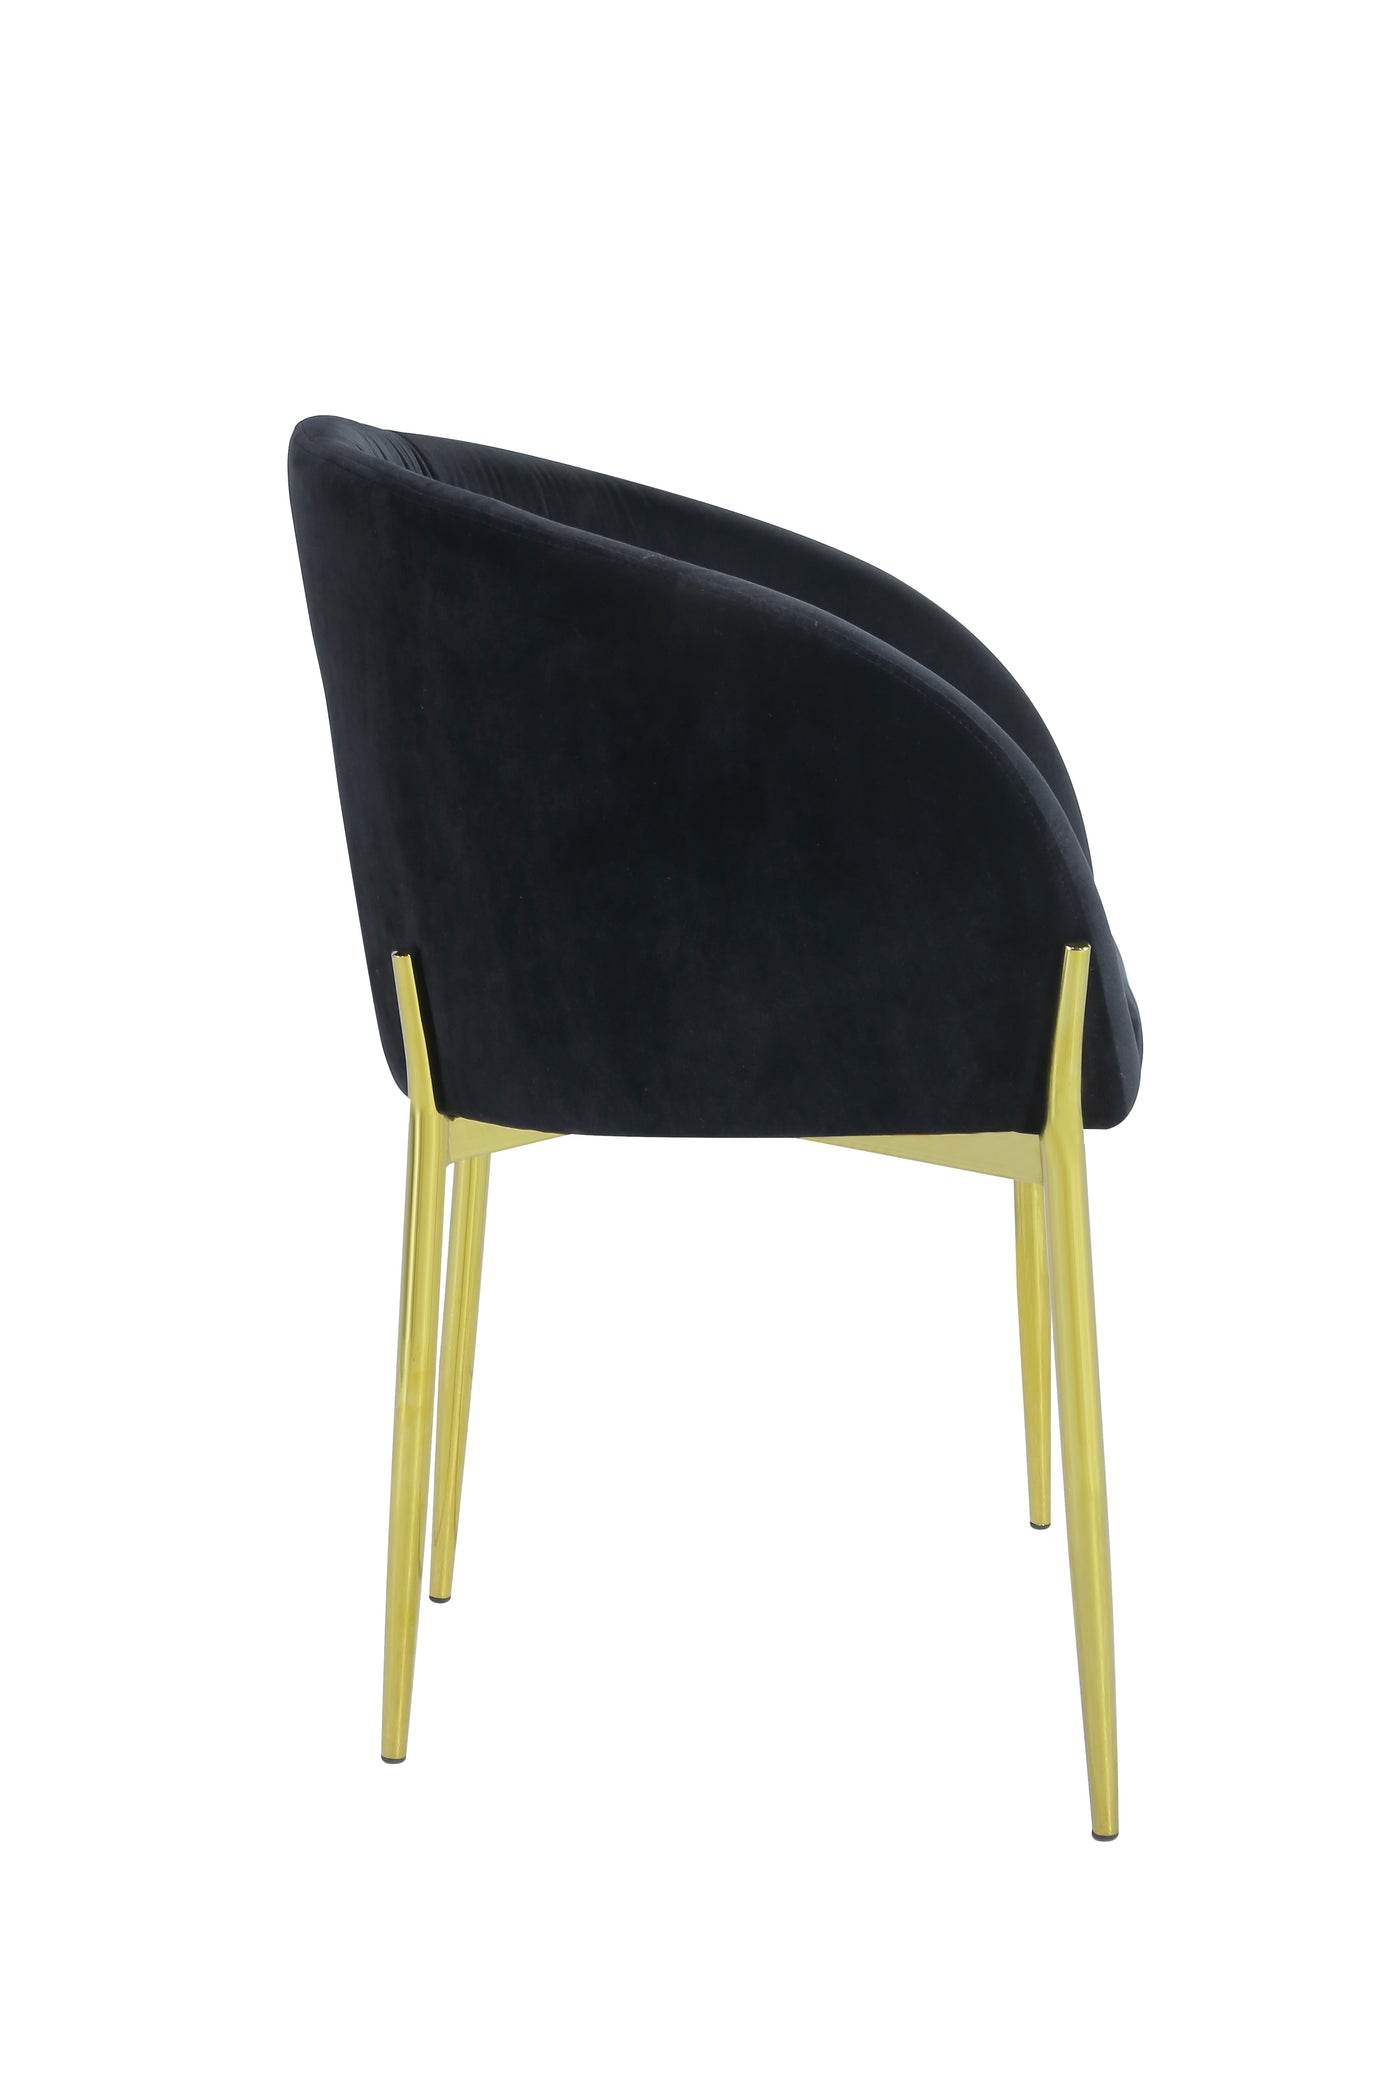 Alfieri Dining Chair Gold/Black - Future Classics Furniture